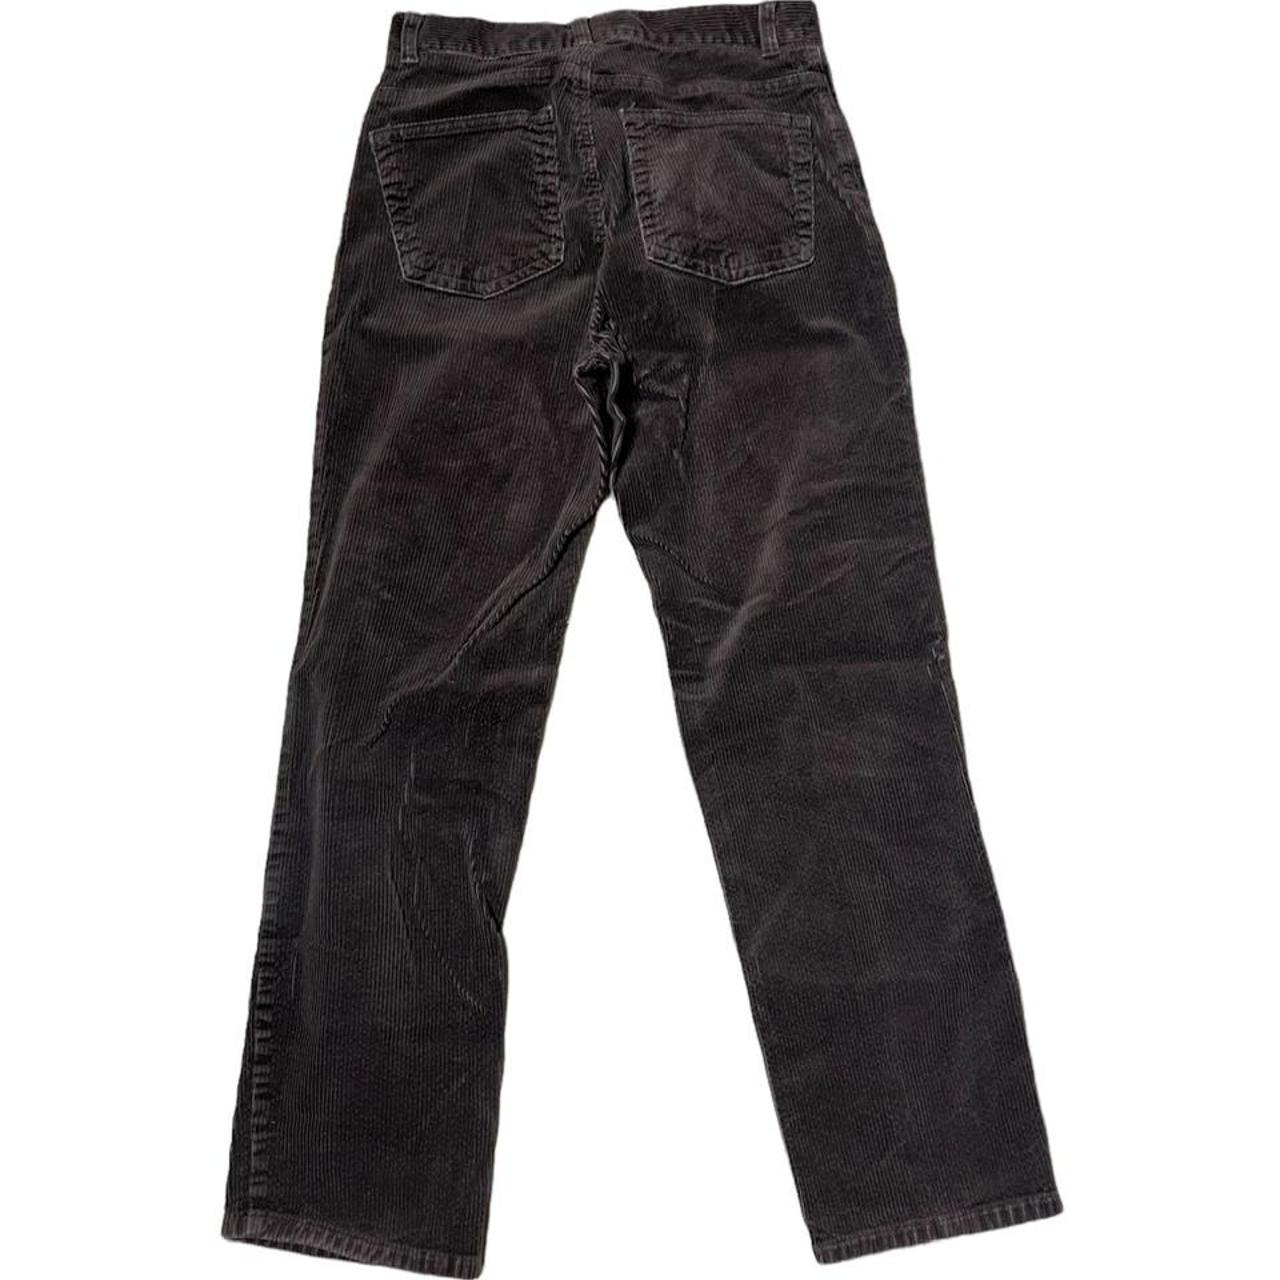 Vintage brown corduroy pants Petite size 4... - Depop